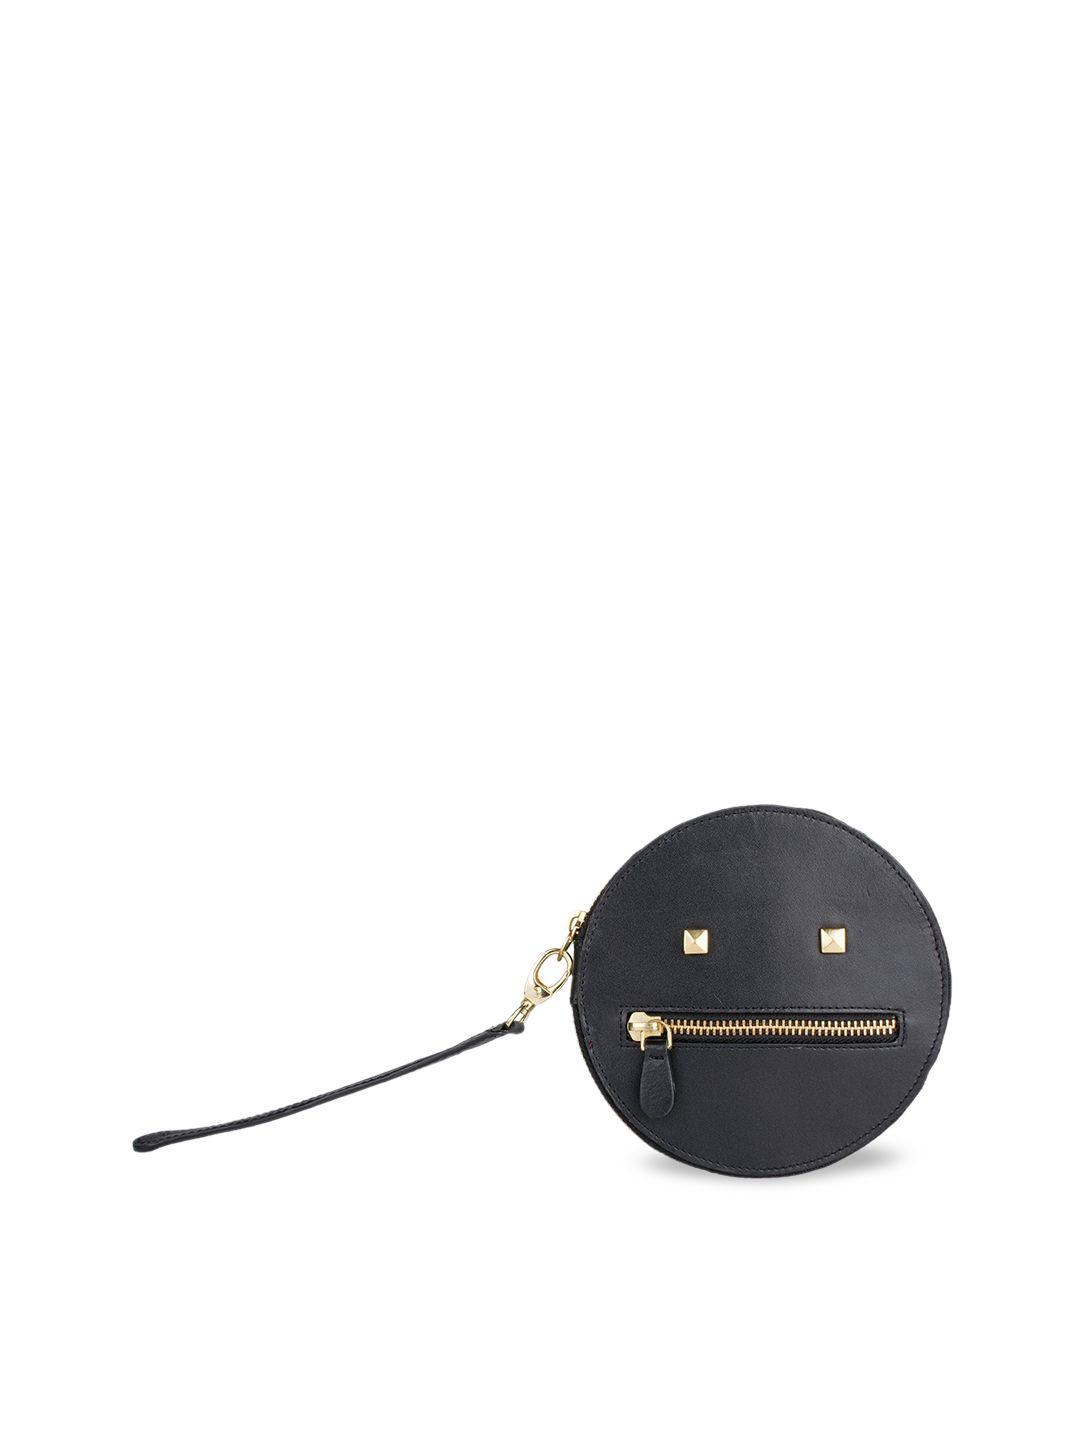 hidesign-women-black-purse